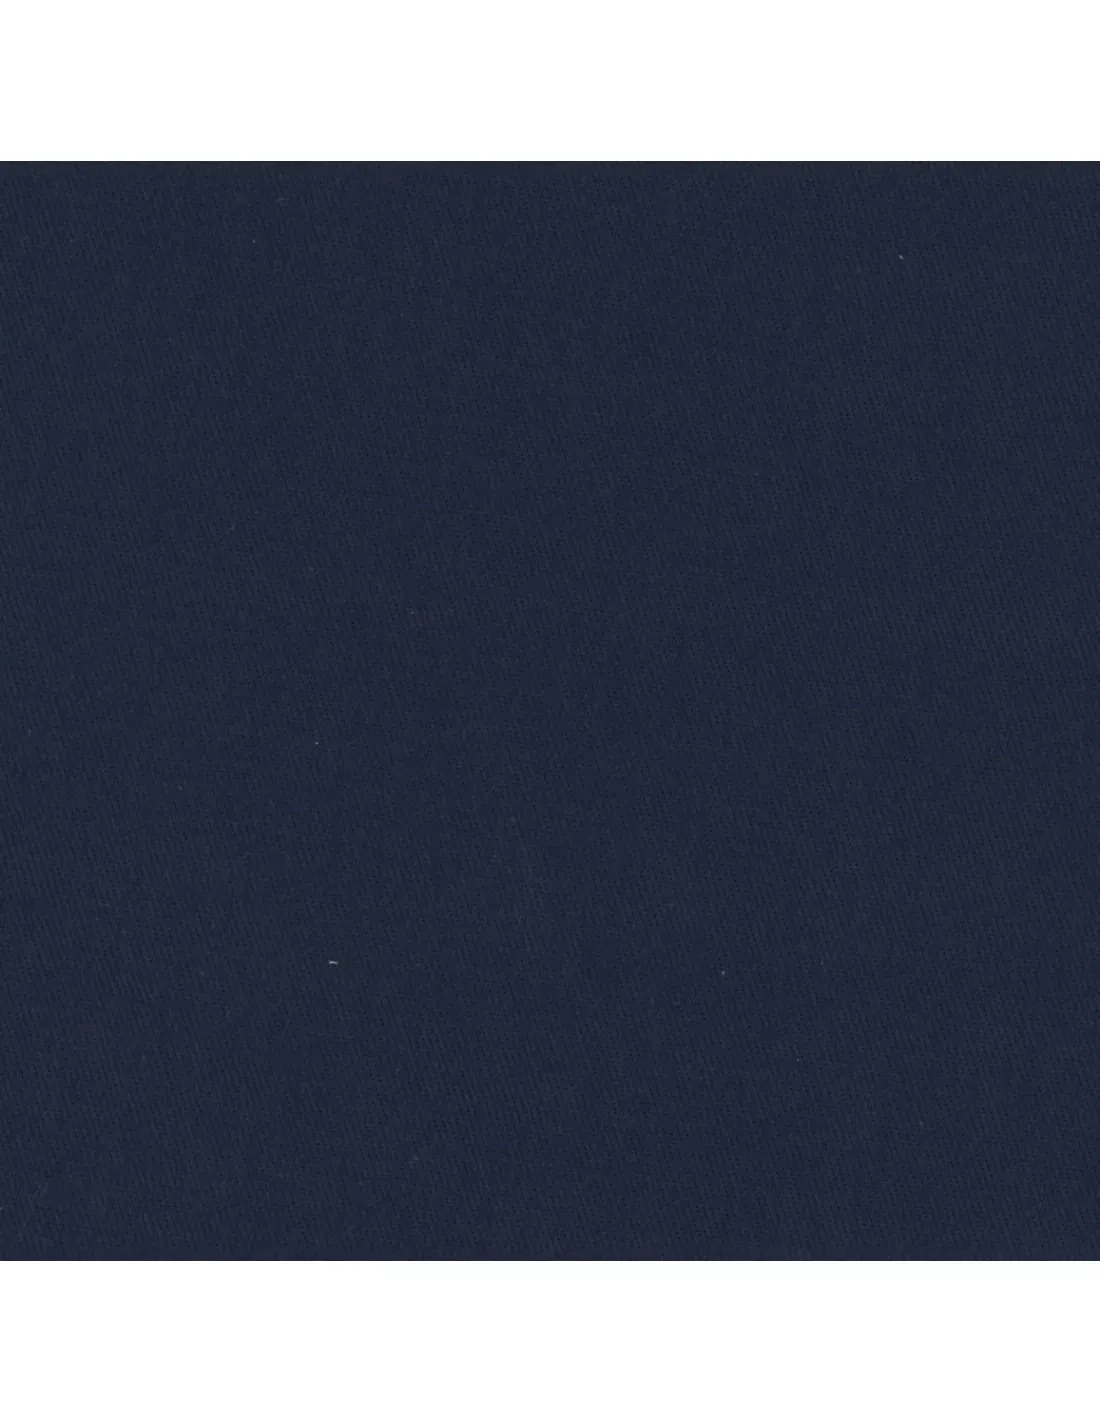 Profuomo shorts navy blauw, Size: 46